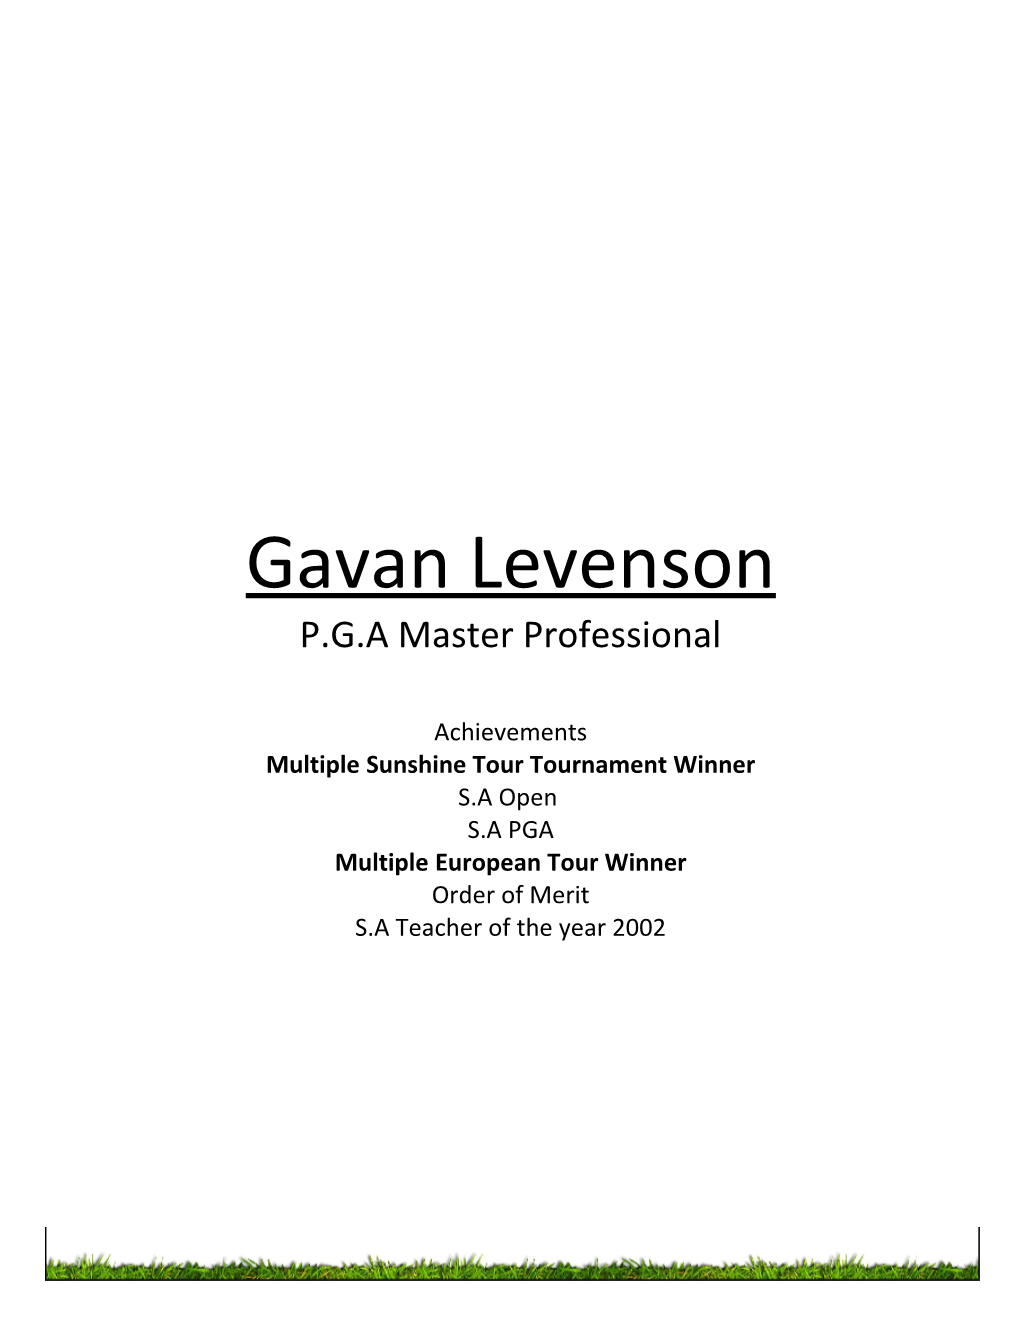 Gavan Levenson Serious Golf Academy